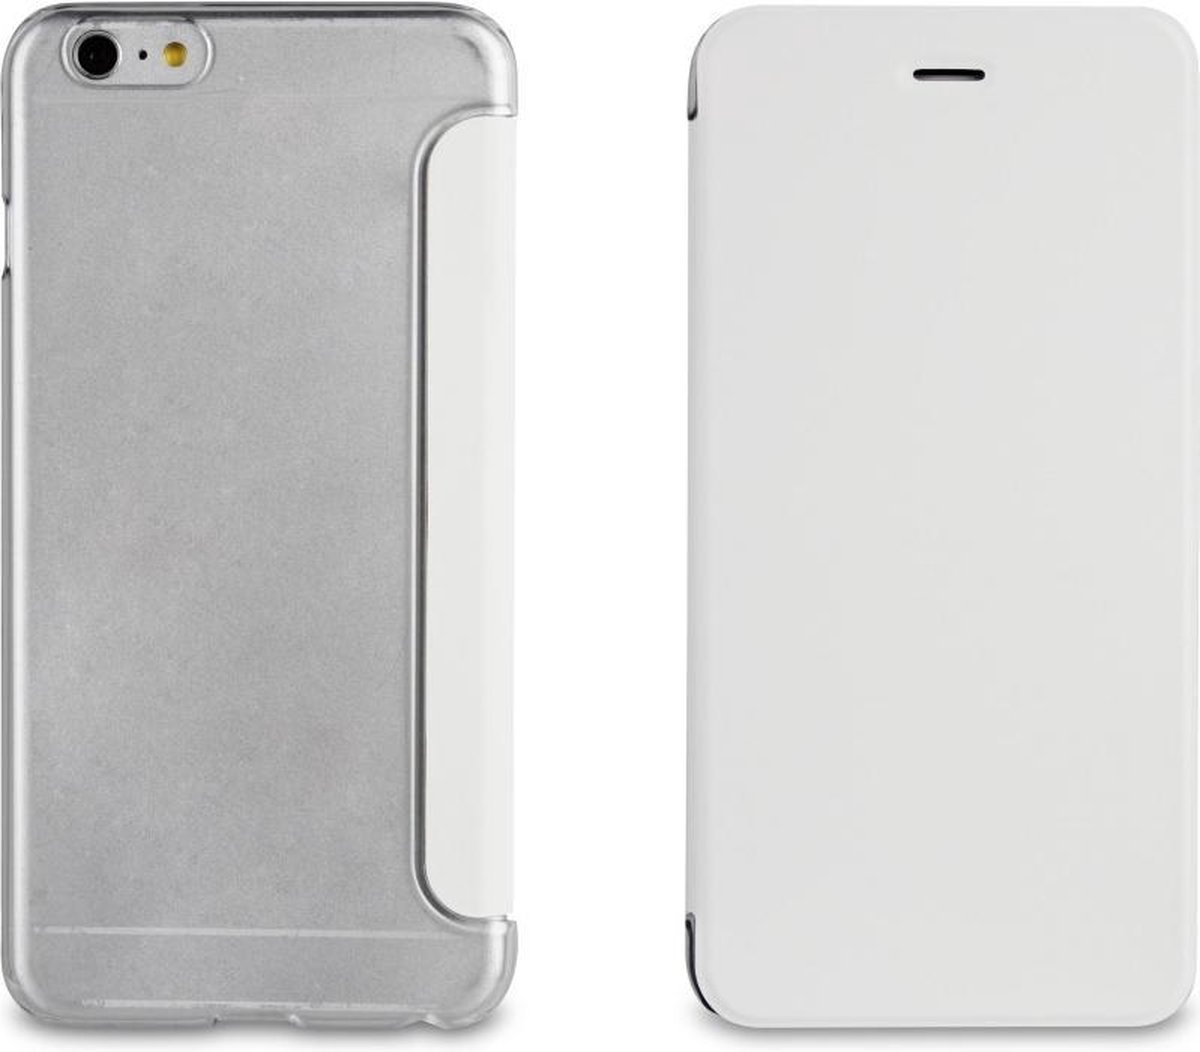 muvit iPhone 6 Plus Easy Folio Crystal Case Wit